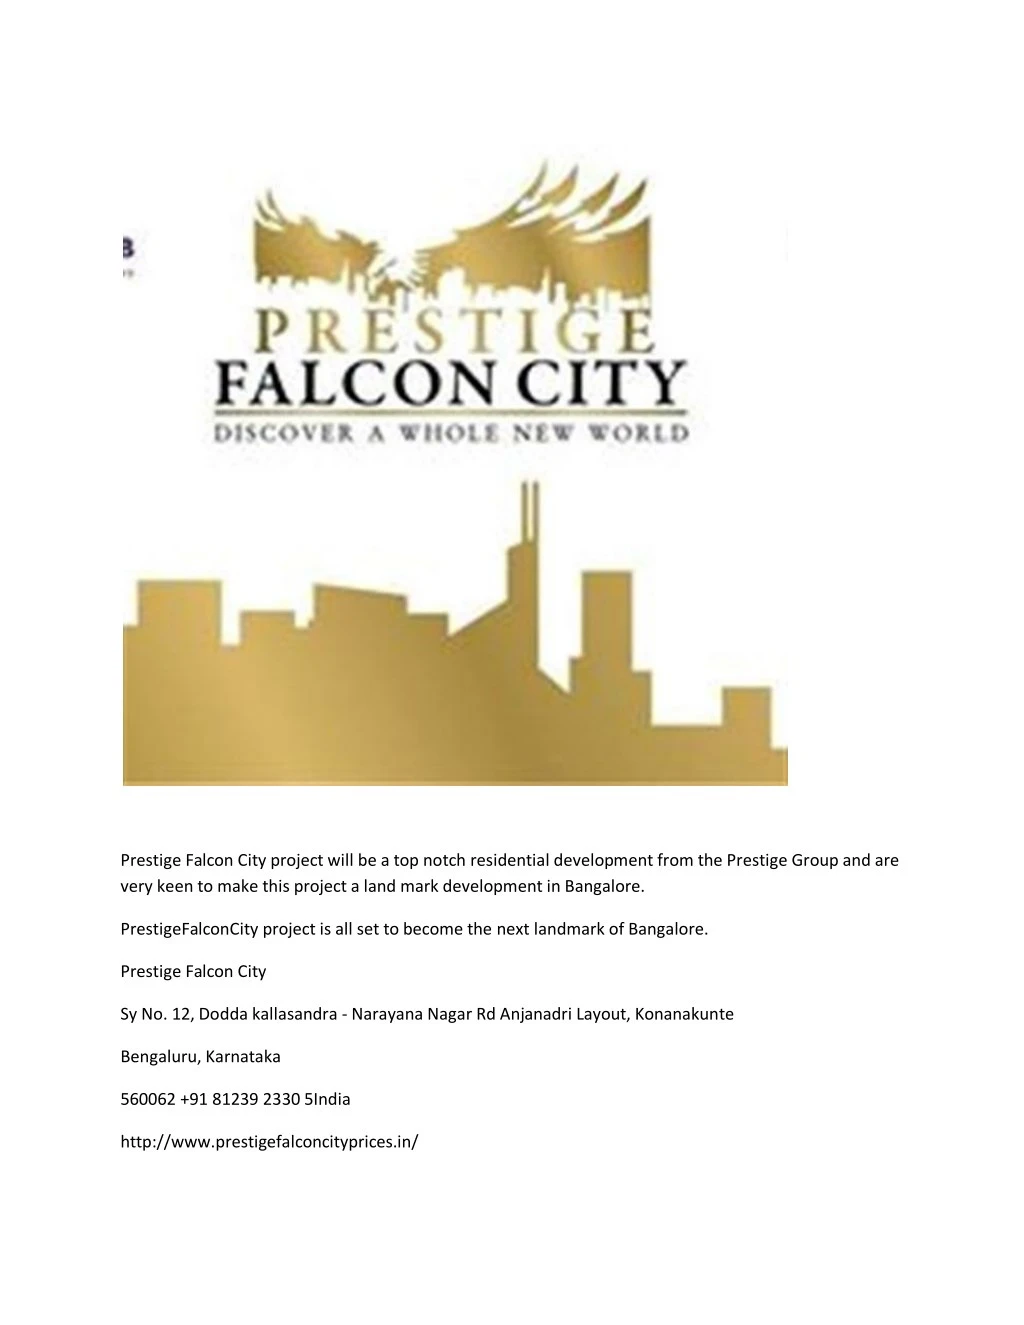 prestige falcon city project will be a top notch